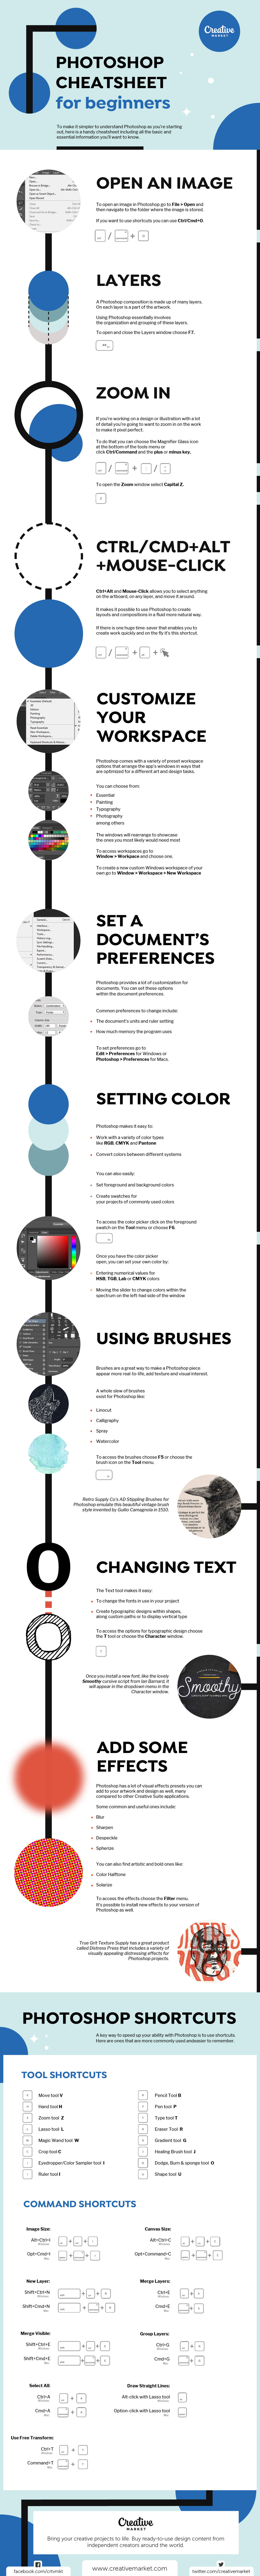 photoshop-cheatsheet-for-beginners-infographic-s.jpg